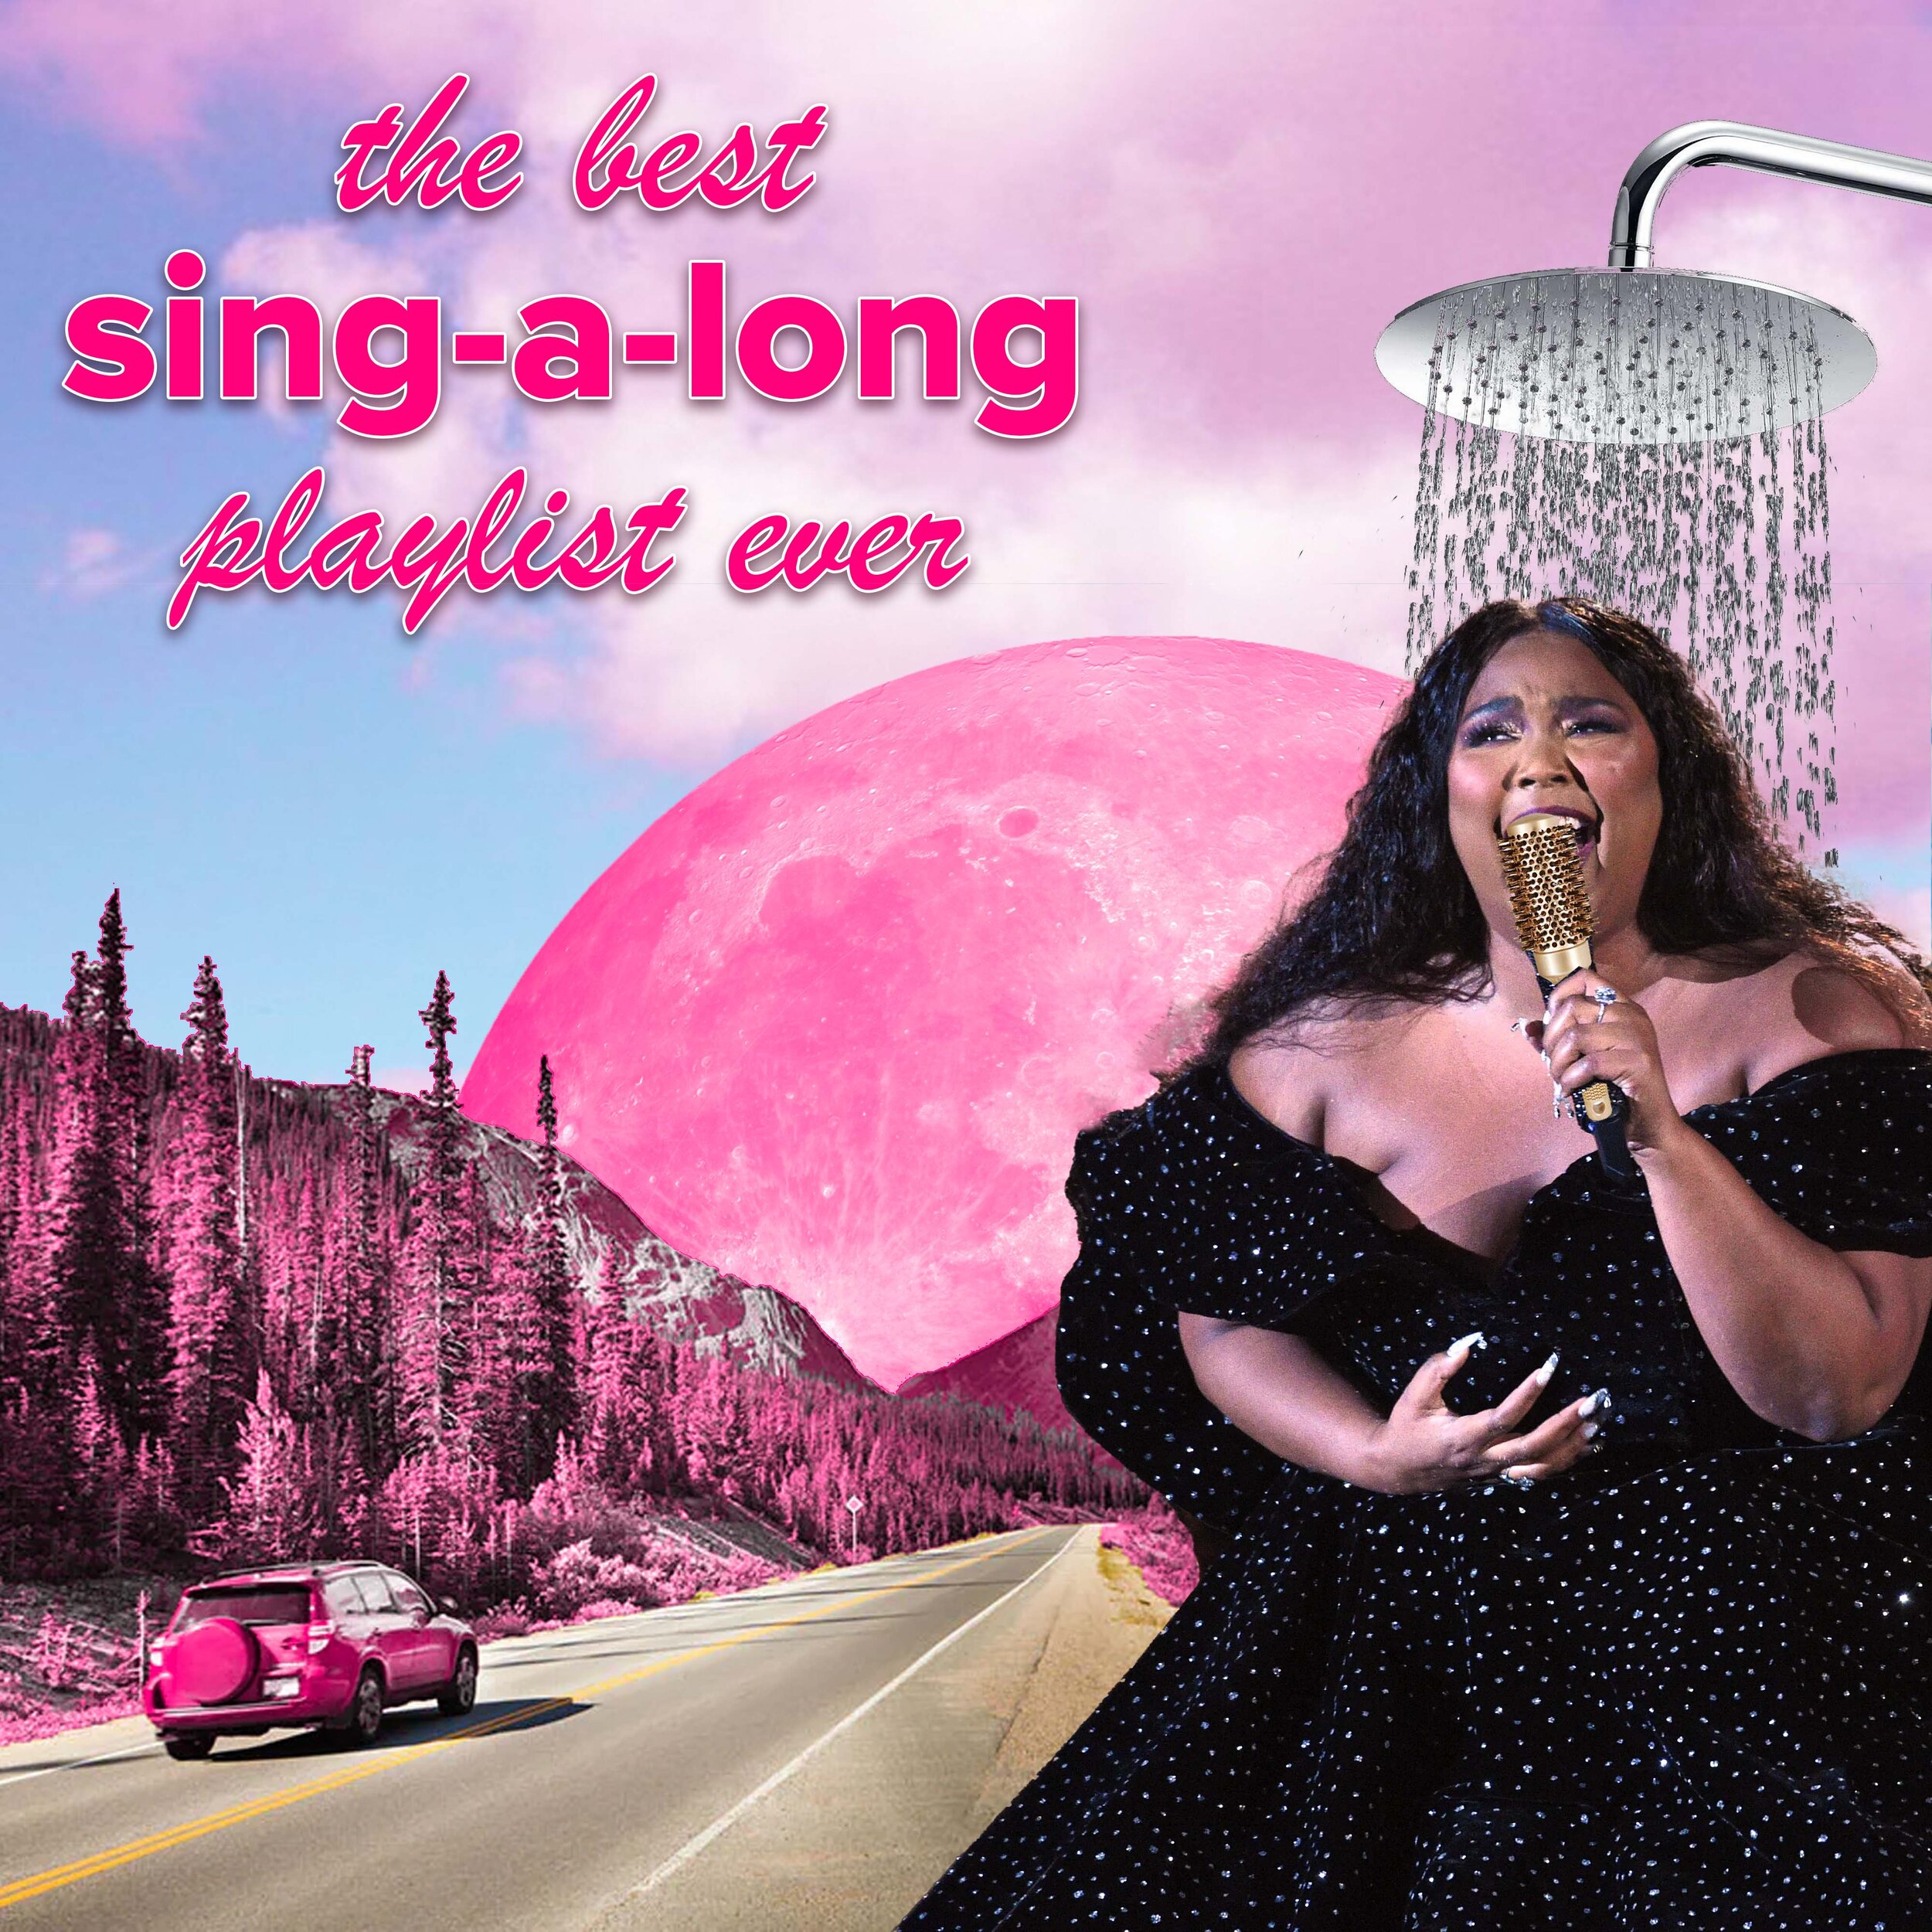 The Best Sing-a-long playlist ever.jpg